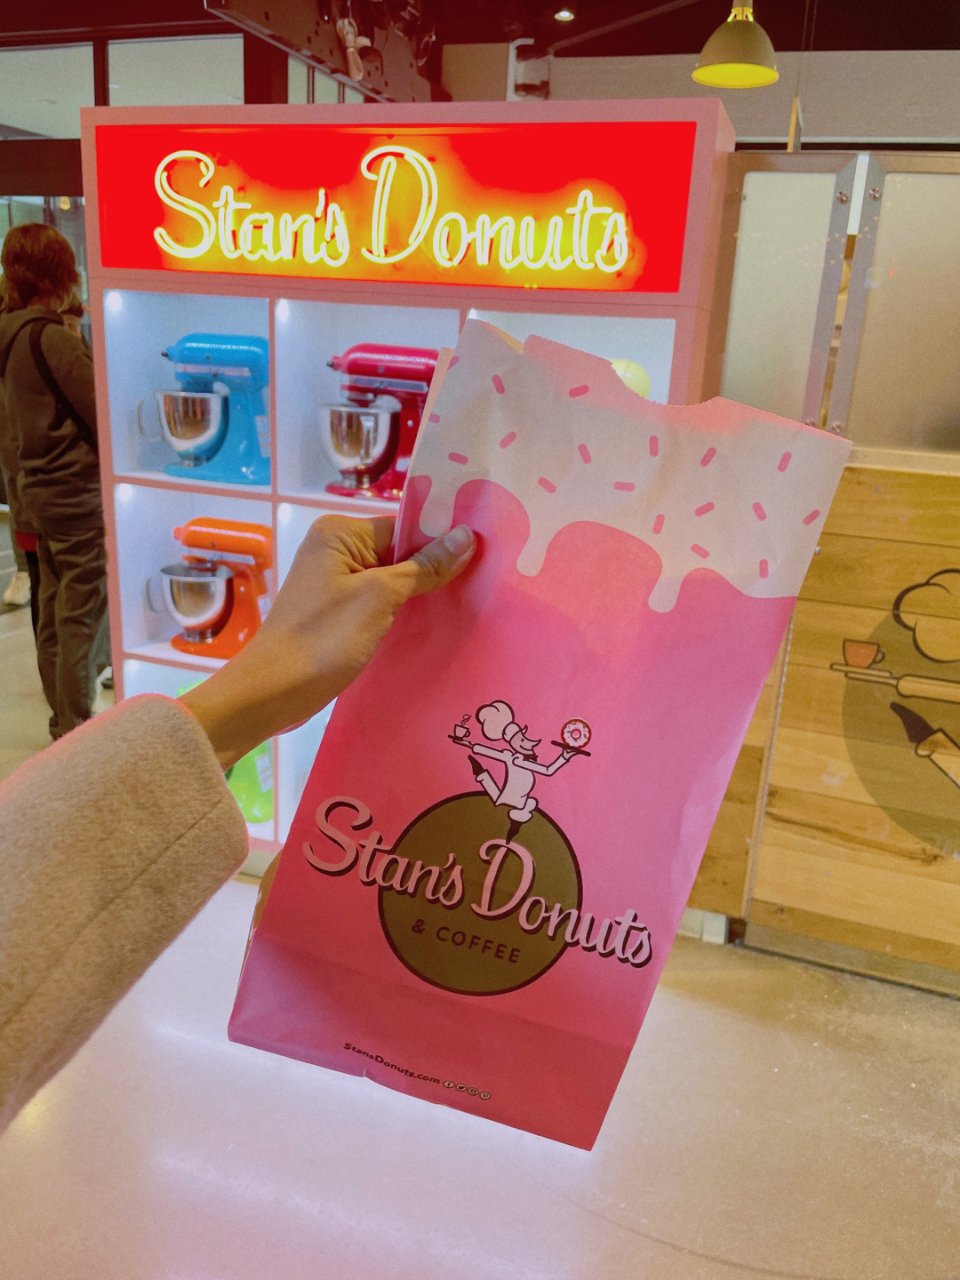 Stan's Donuts & Coffee